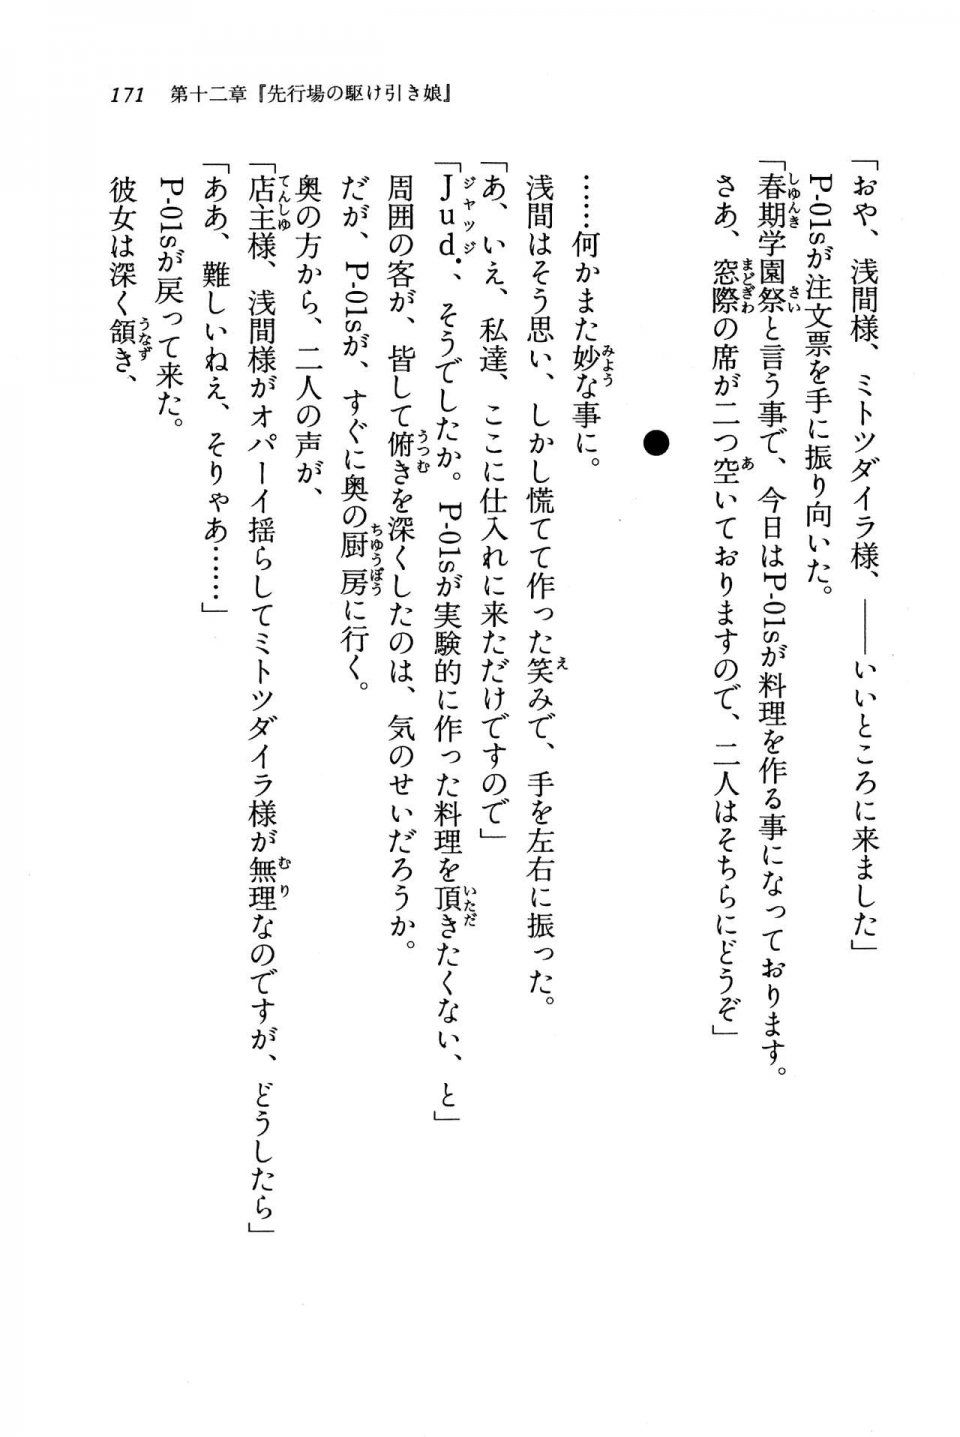 Kyoukai Senjou no Horizon BD Special Mininovel Vol 8(4B) - Photo #175